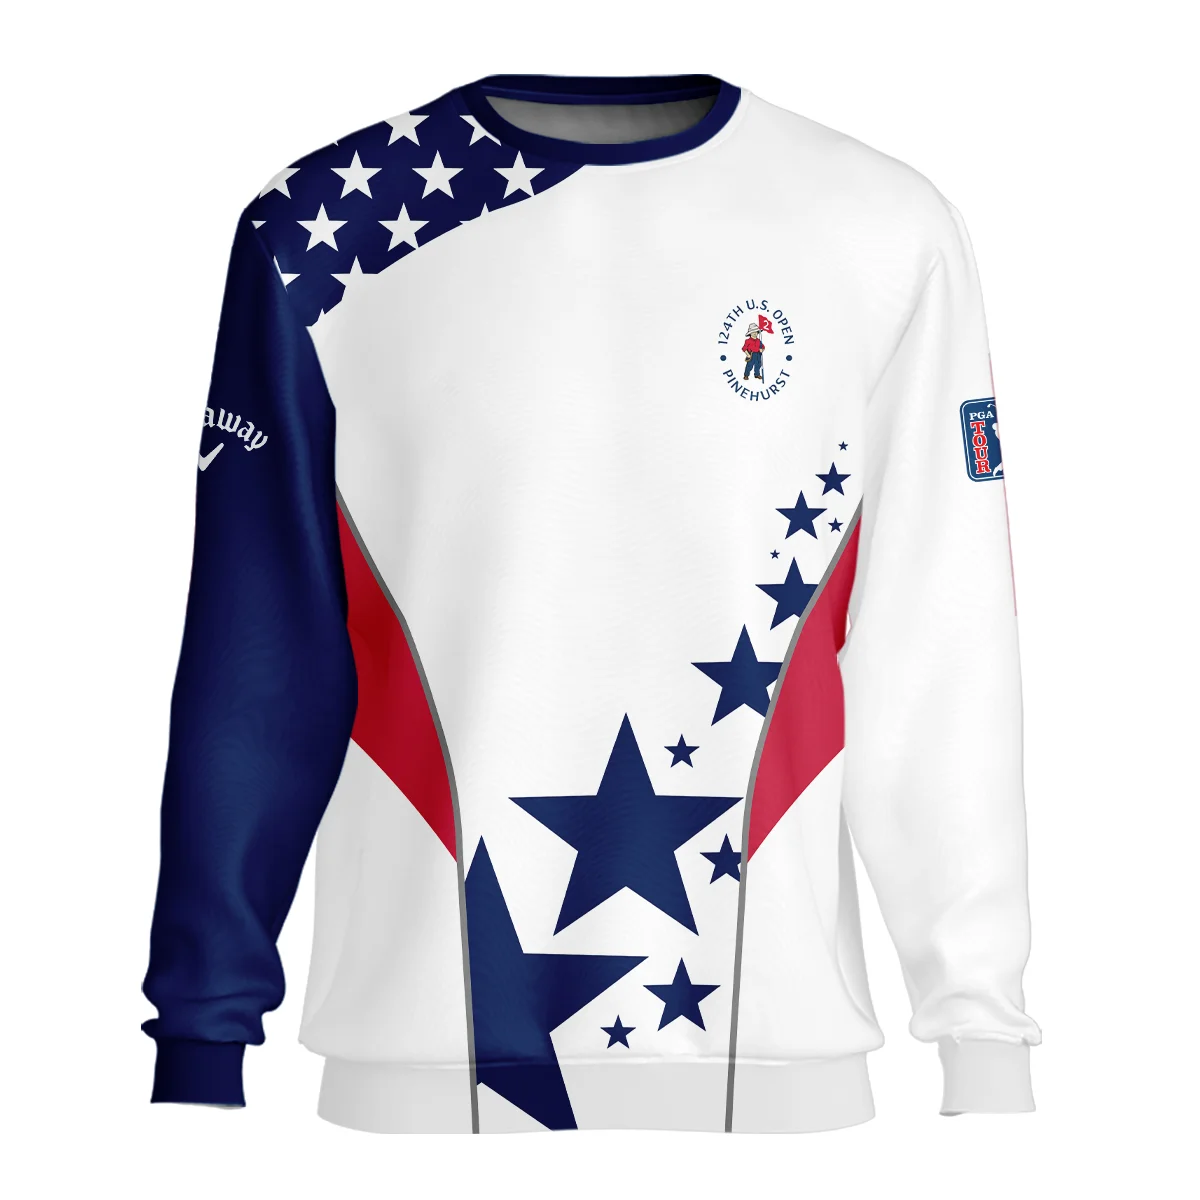 124th U.S. Open Pinehurst Callaway Stars US Flag White Blue Vneck Polo Shirt Style Classic Polo Shirt For Men